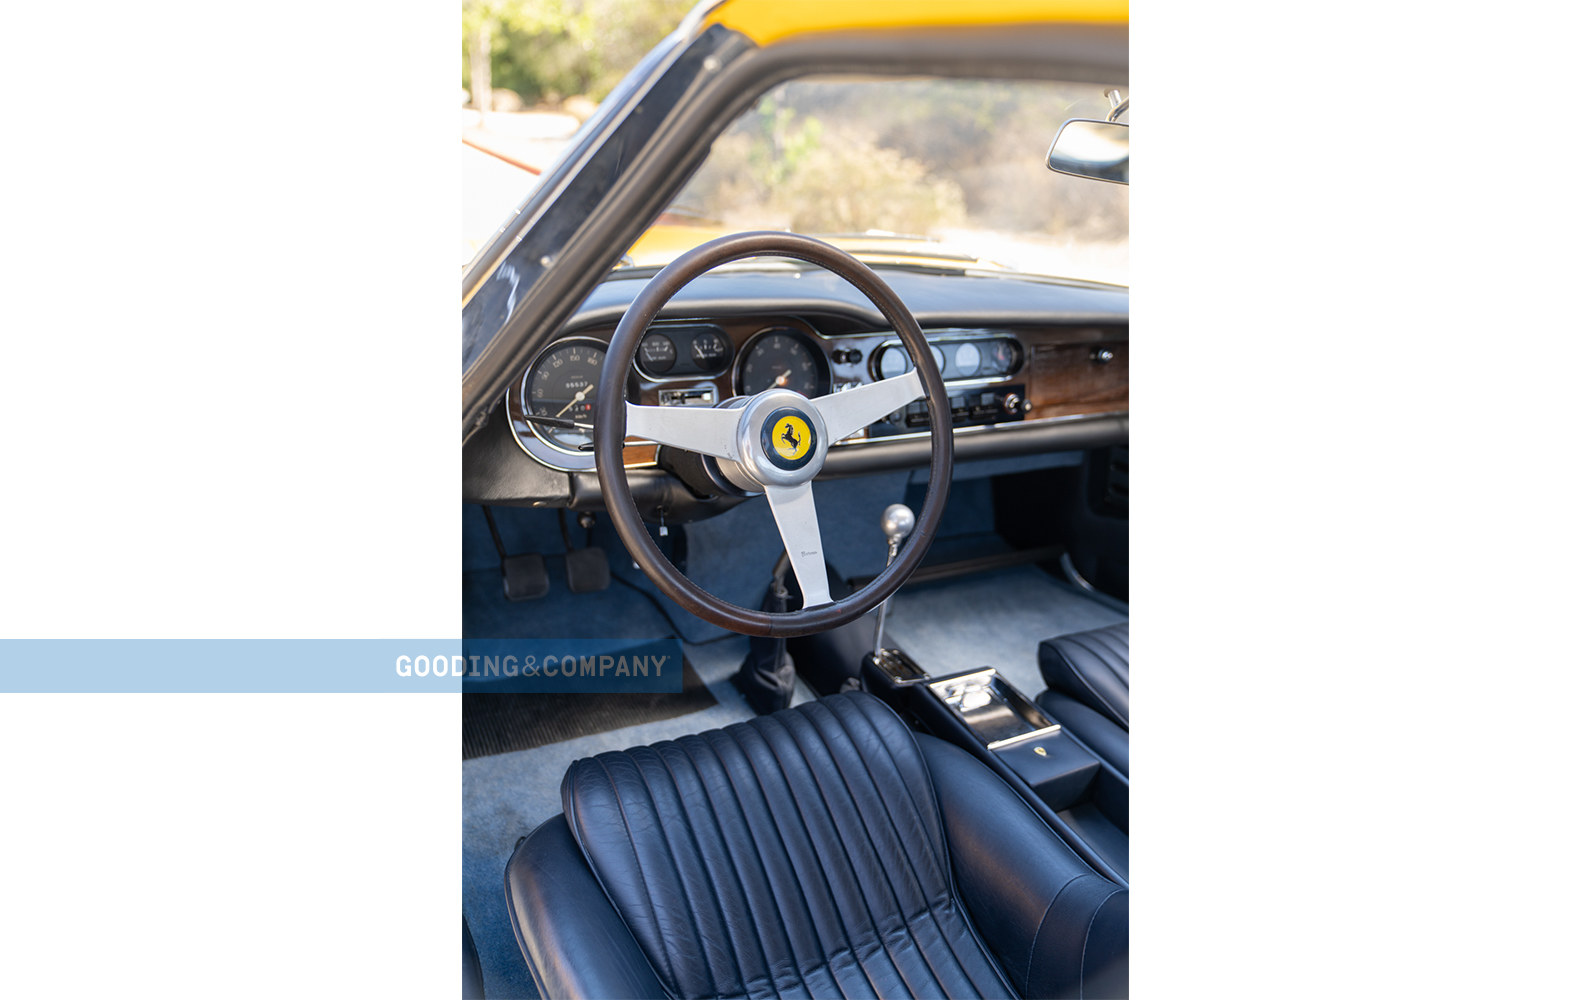 1965 Ferrari 275 Gtb Gooding Company